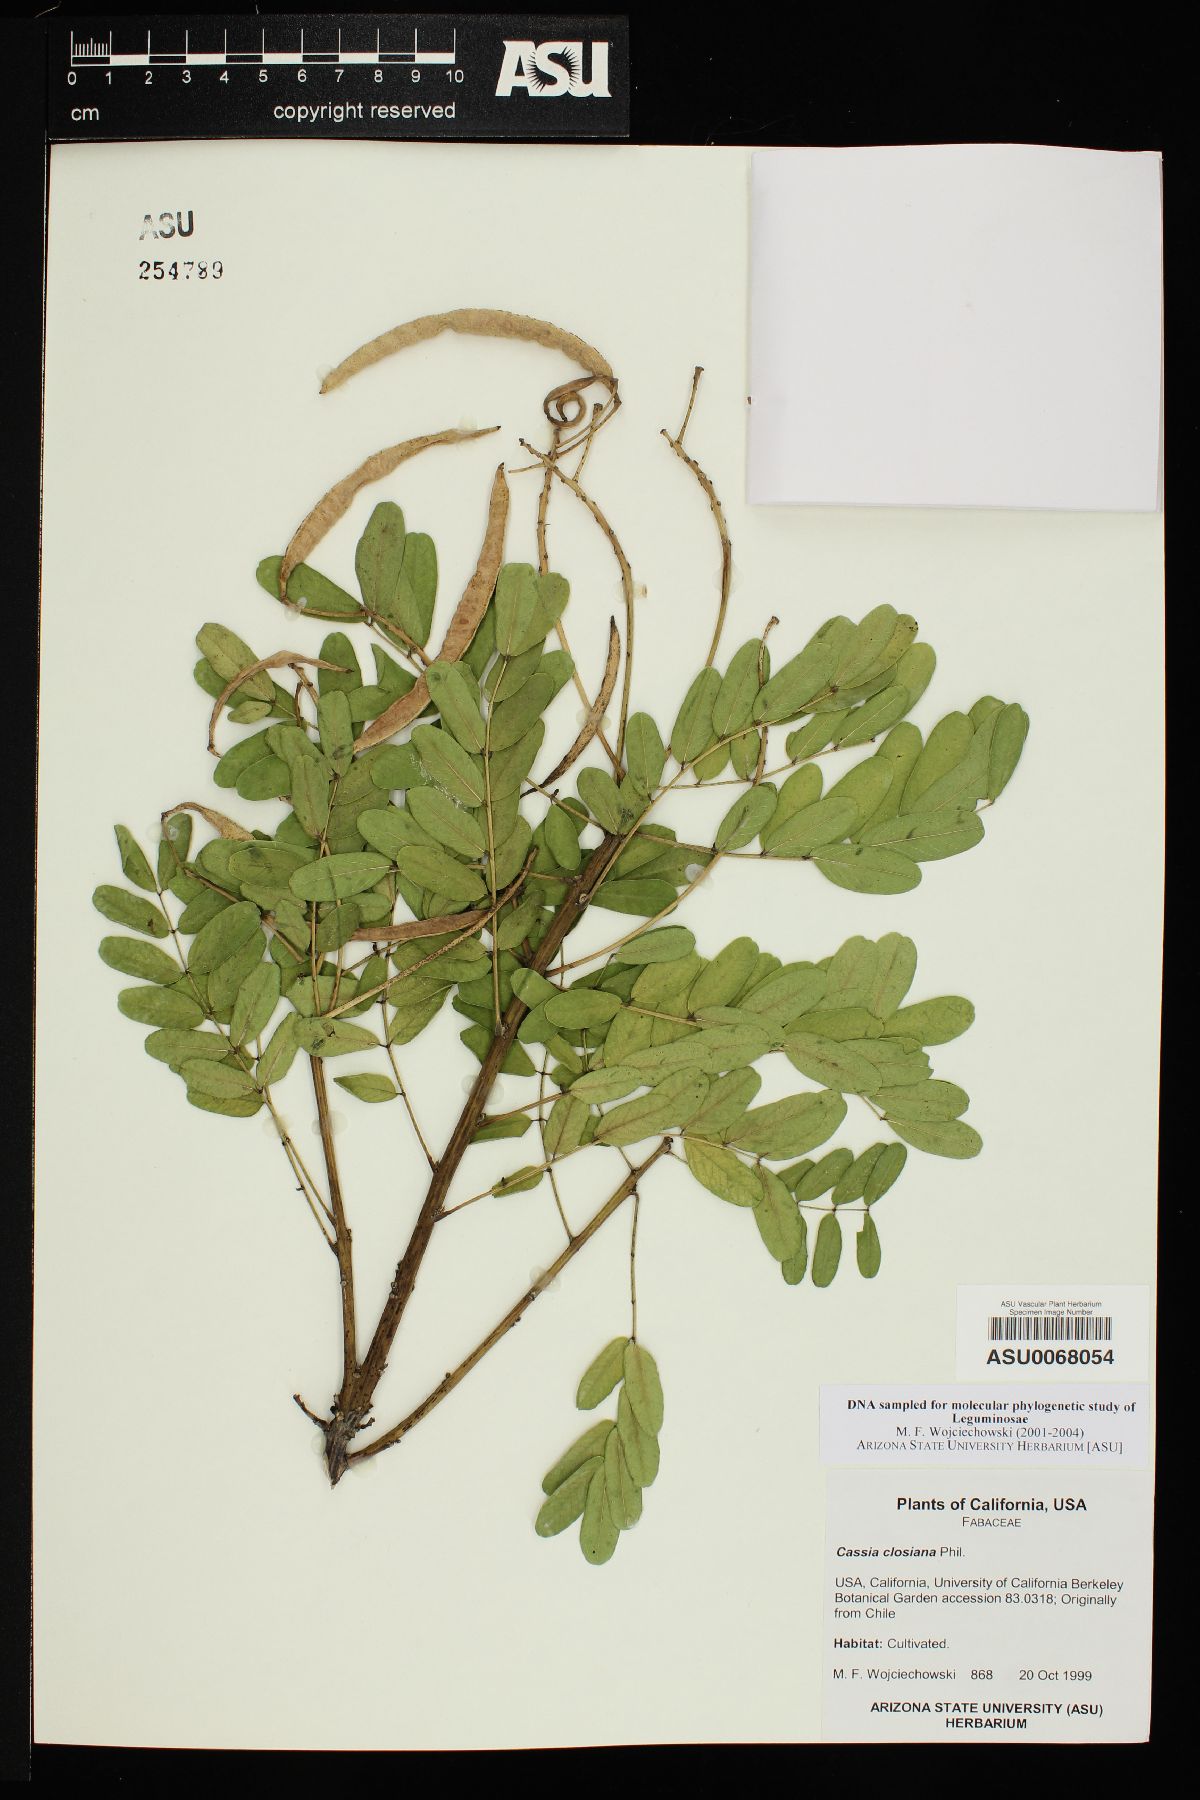 Cassia closiana image